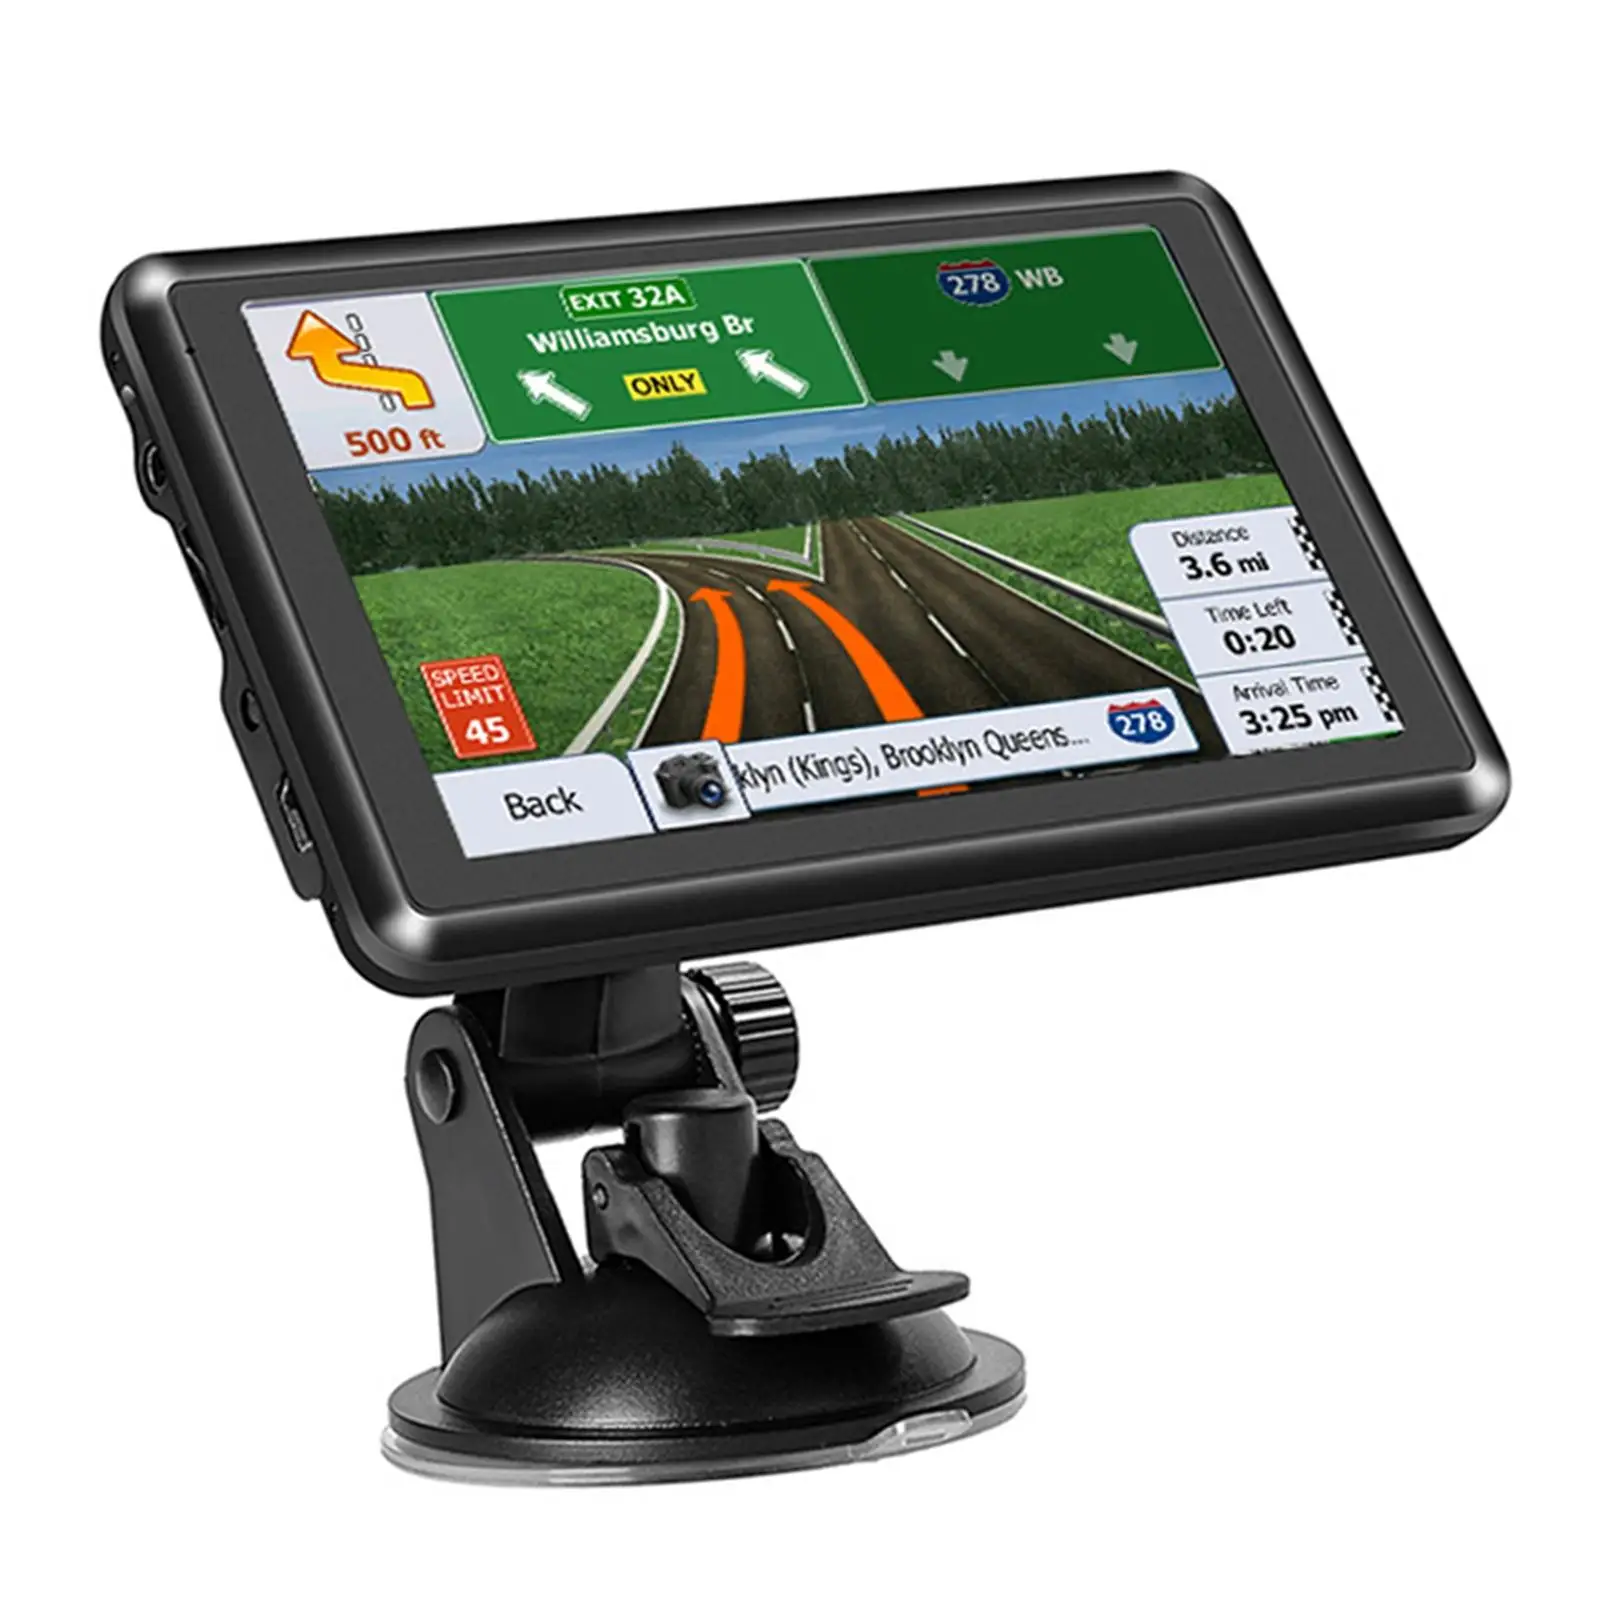 5 inch GPS Navigation Touchscreen Stereo FM Transmitter Portable Safe Driving Guidance GPS Satellite Navigation System for Car